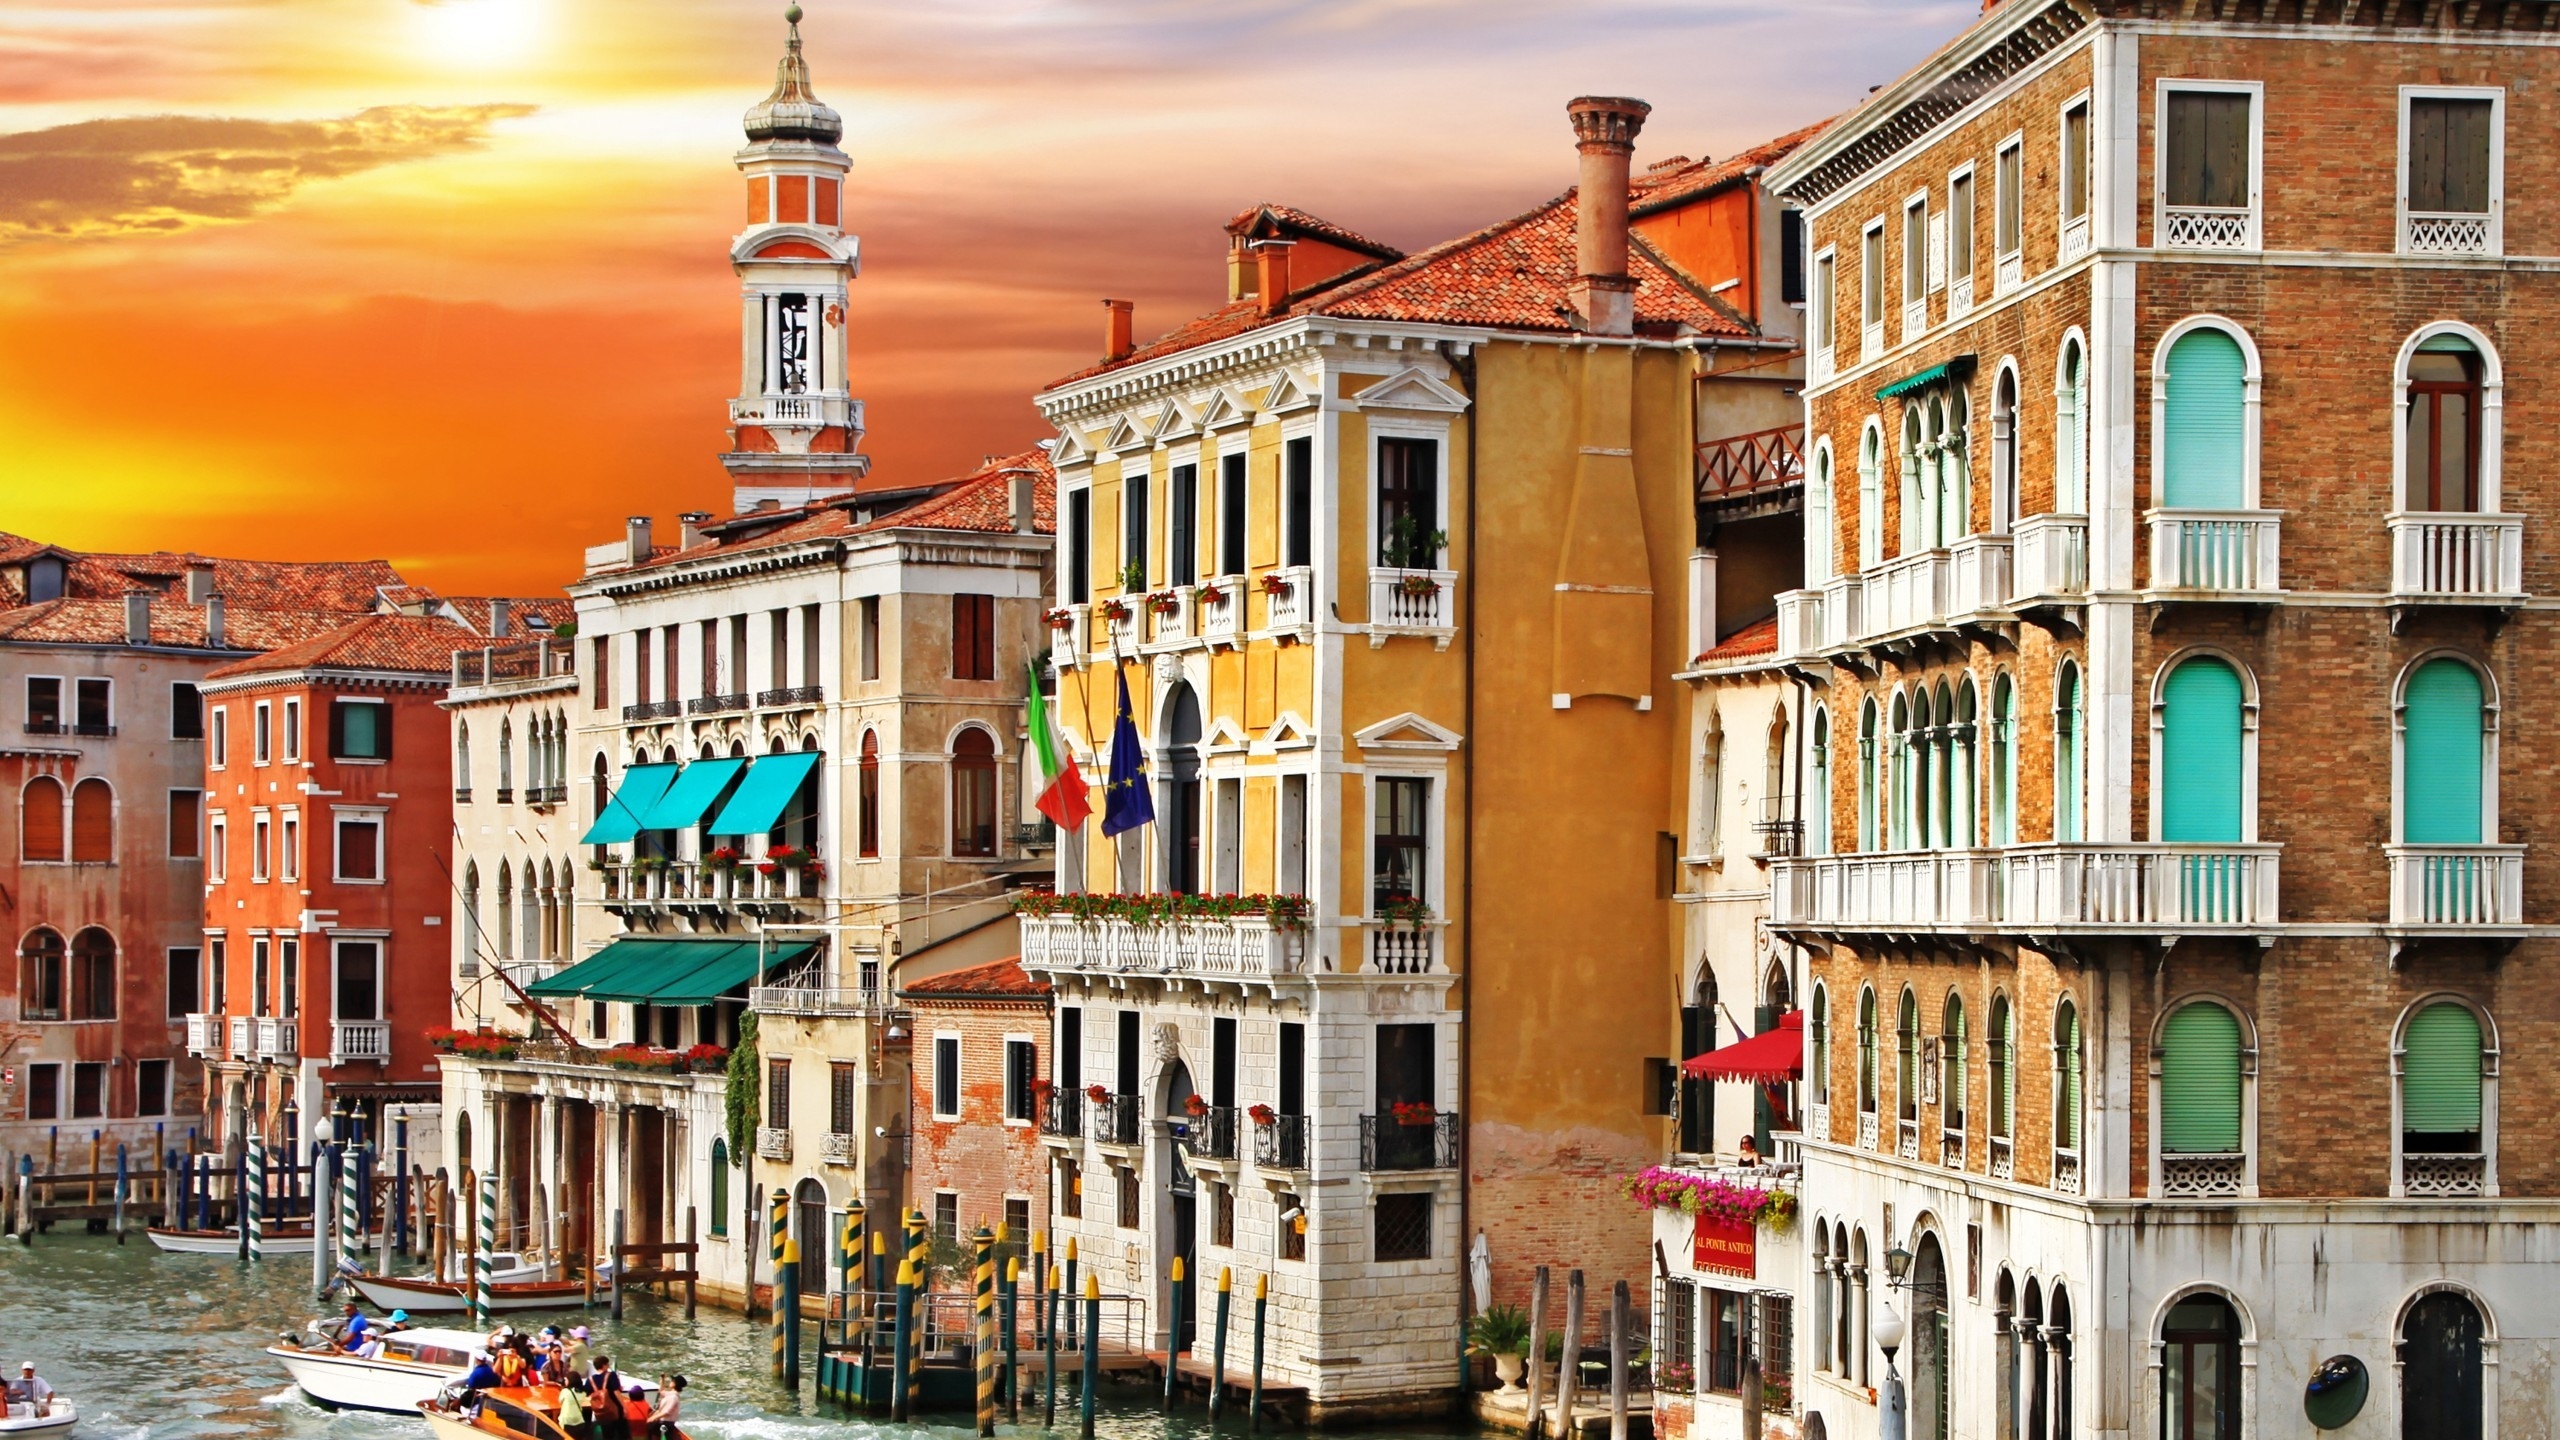 Colorful Venice Corner for 2560x1440 HDTV resolution